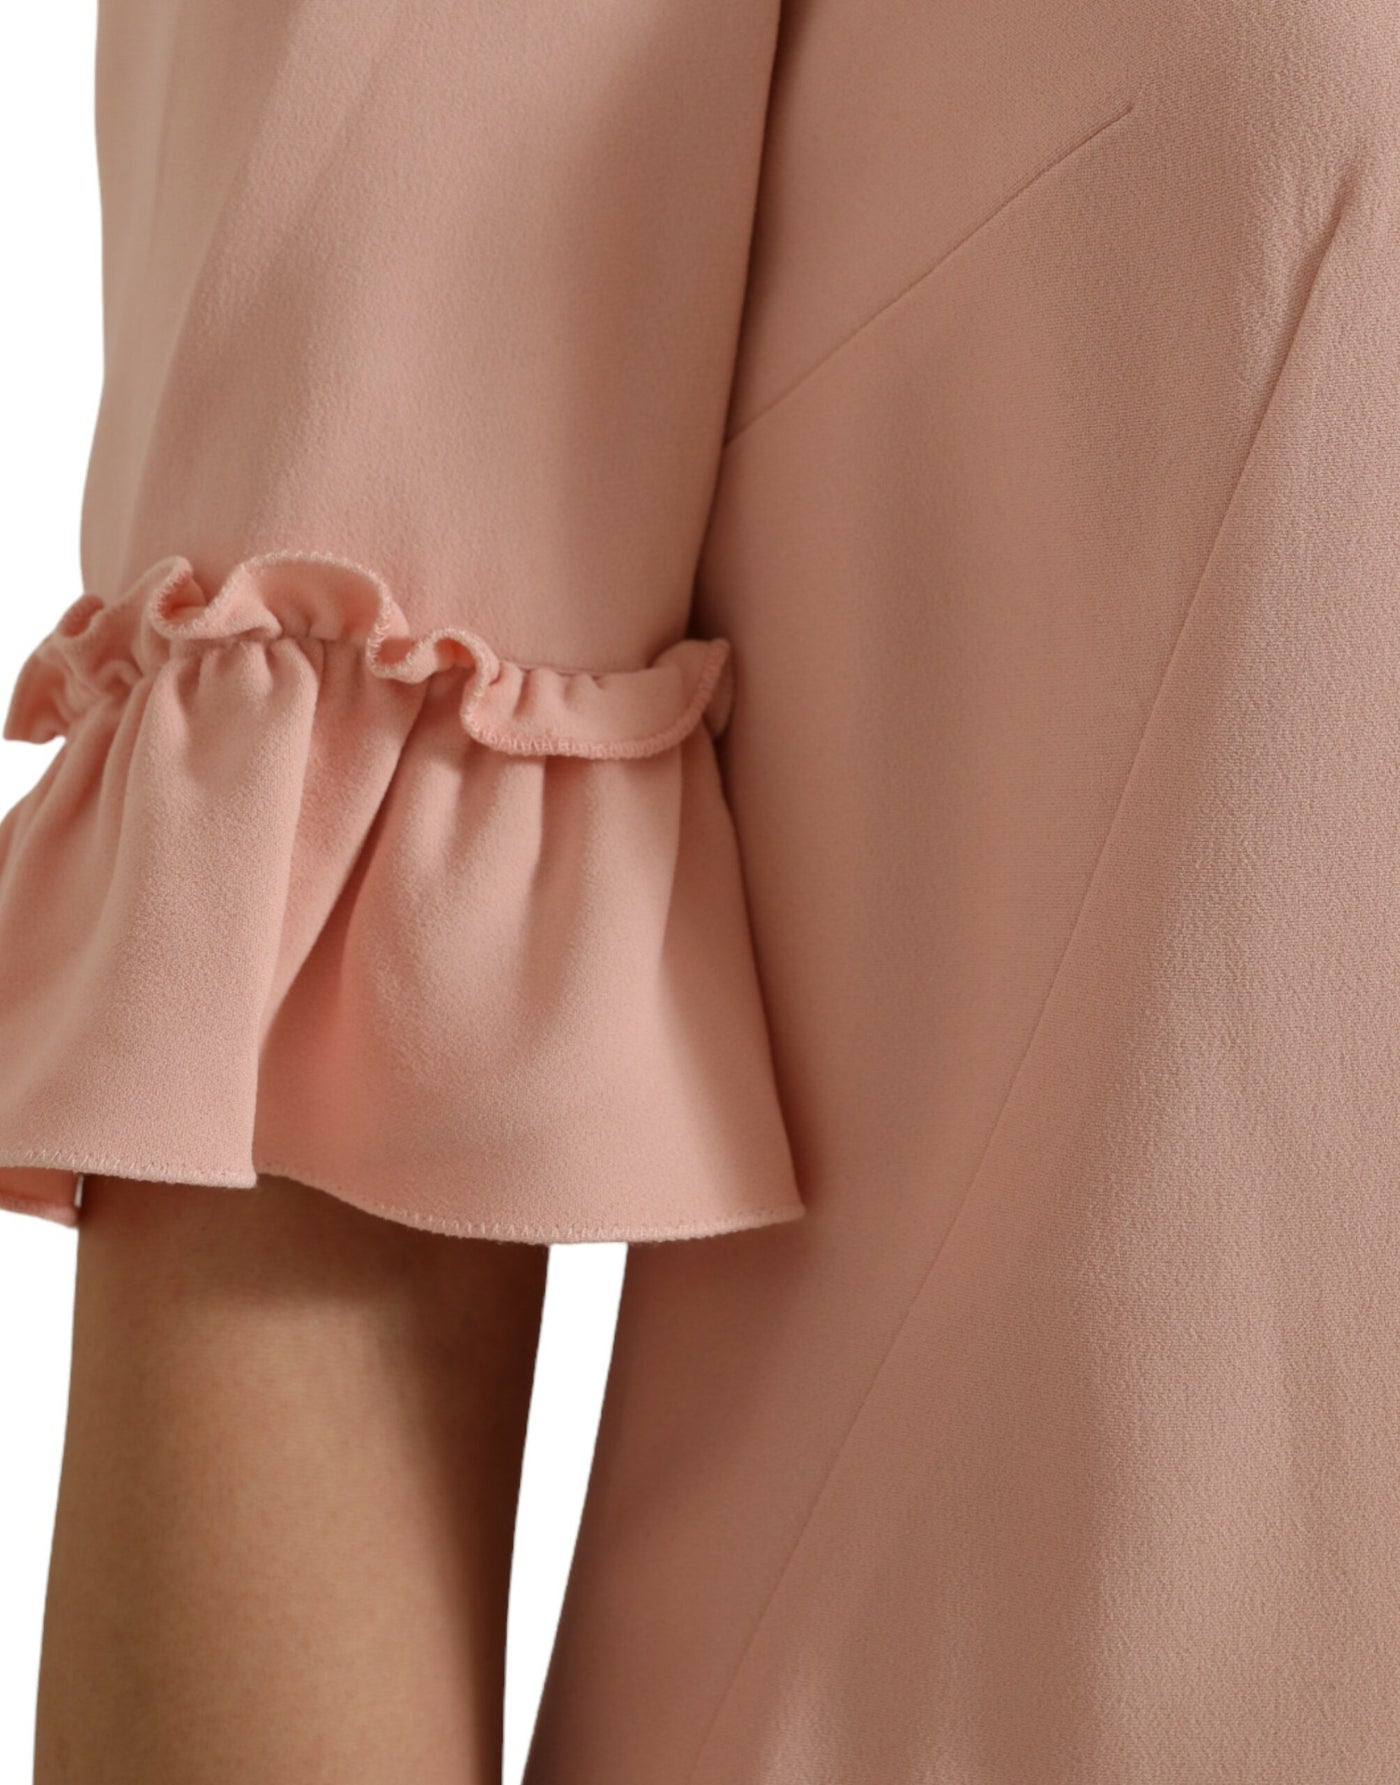 Dolce & Gabbana Light Pink Viscose A-line Shift Mini Dress